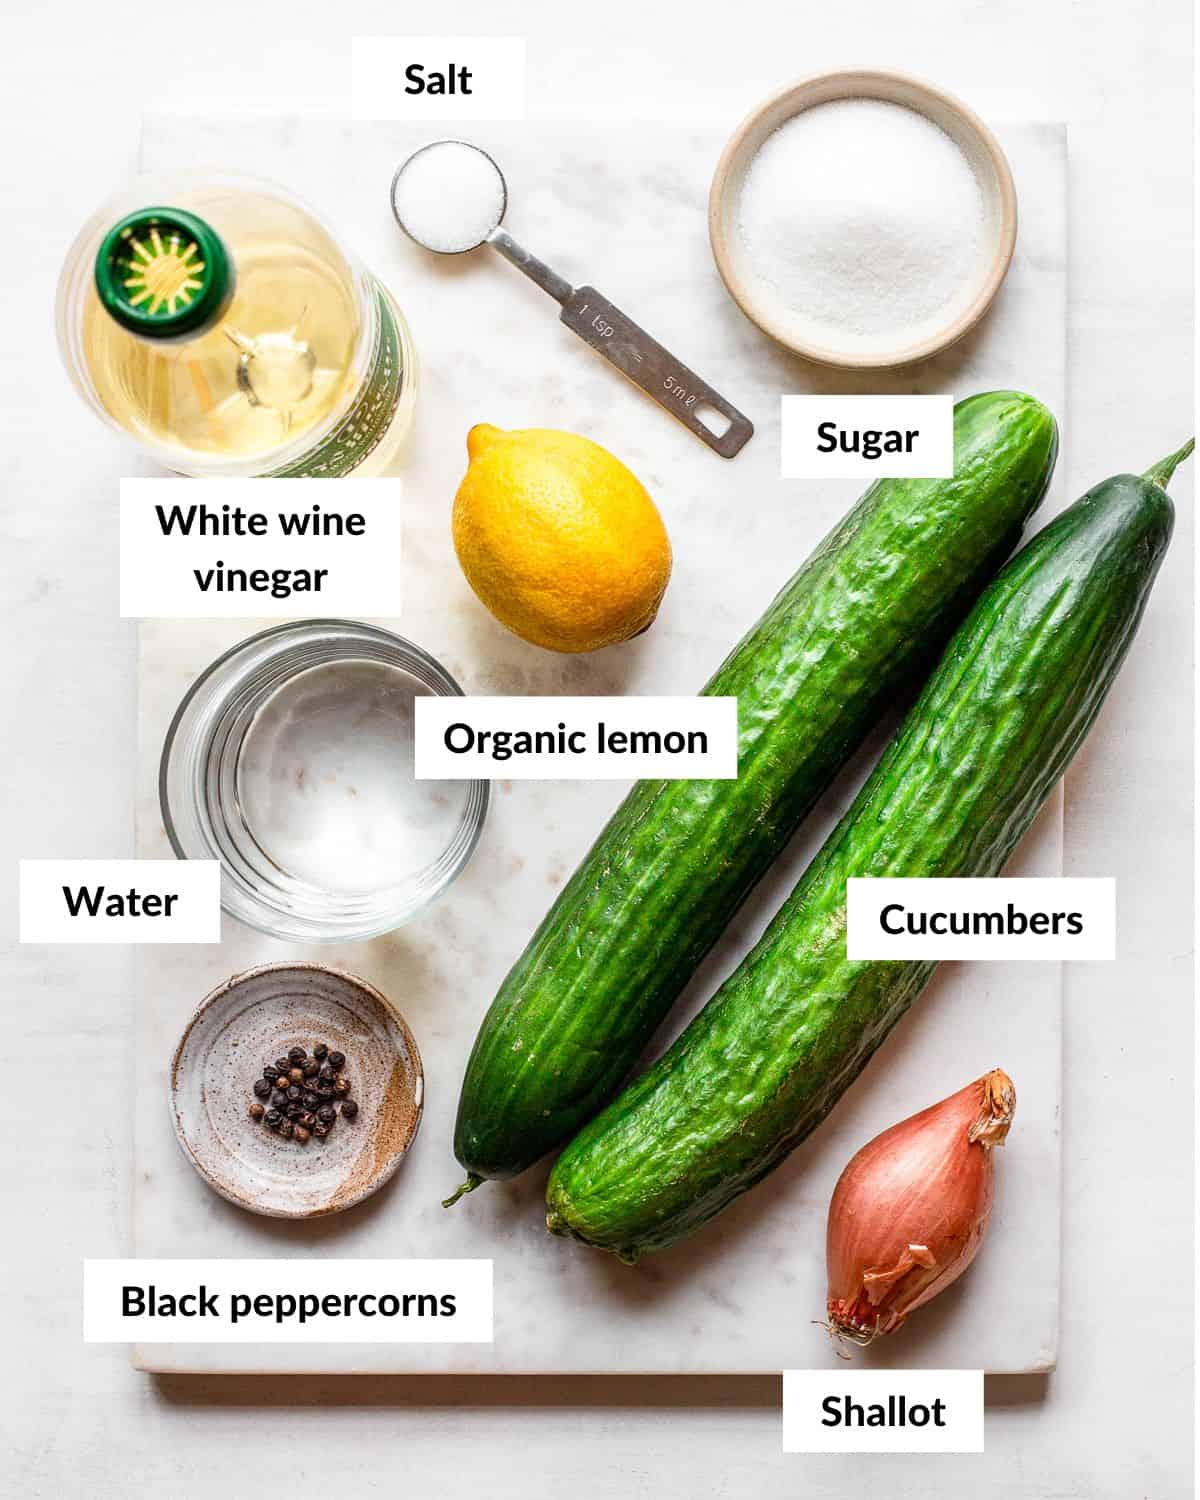 Ingredients for pickled cucumber salad with descriptive labels.